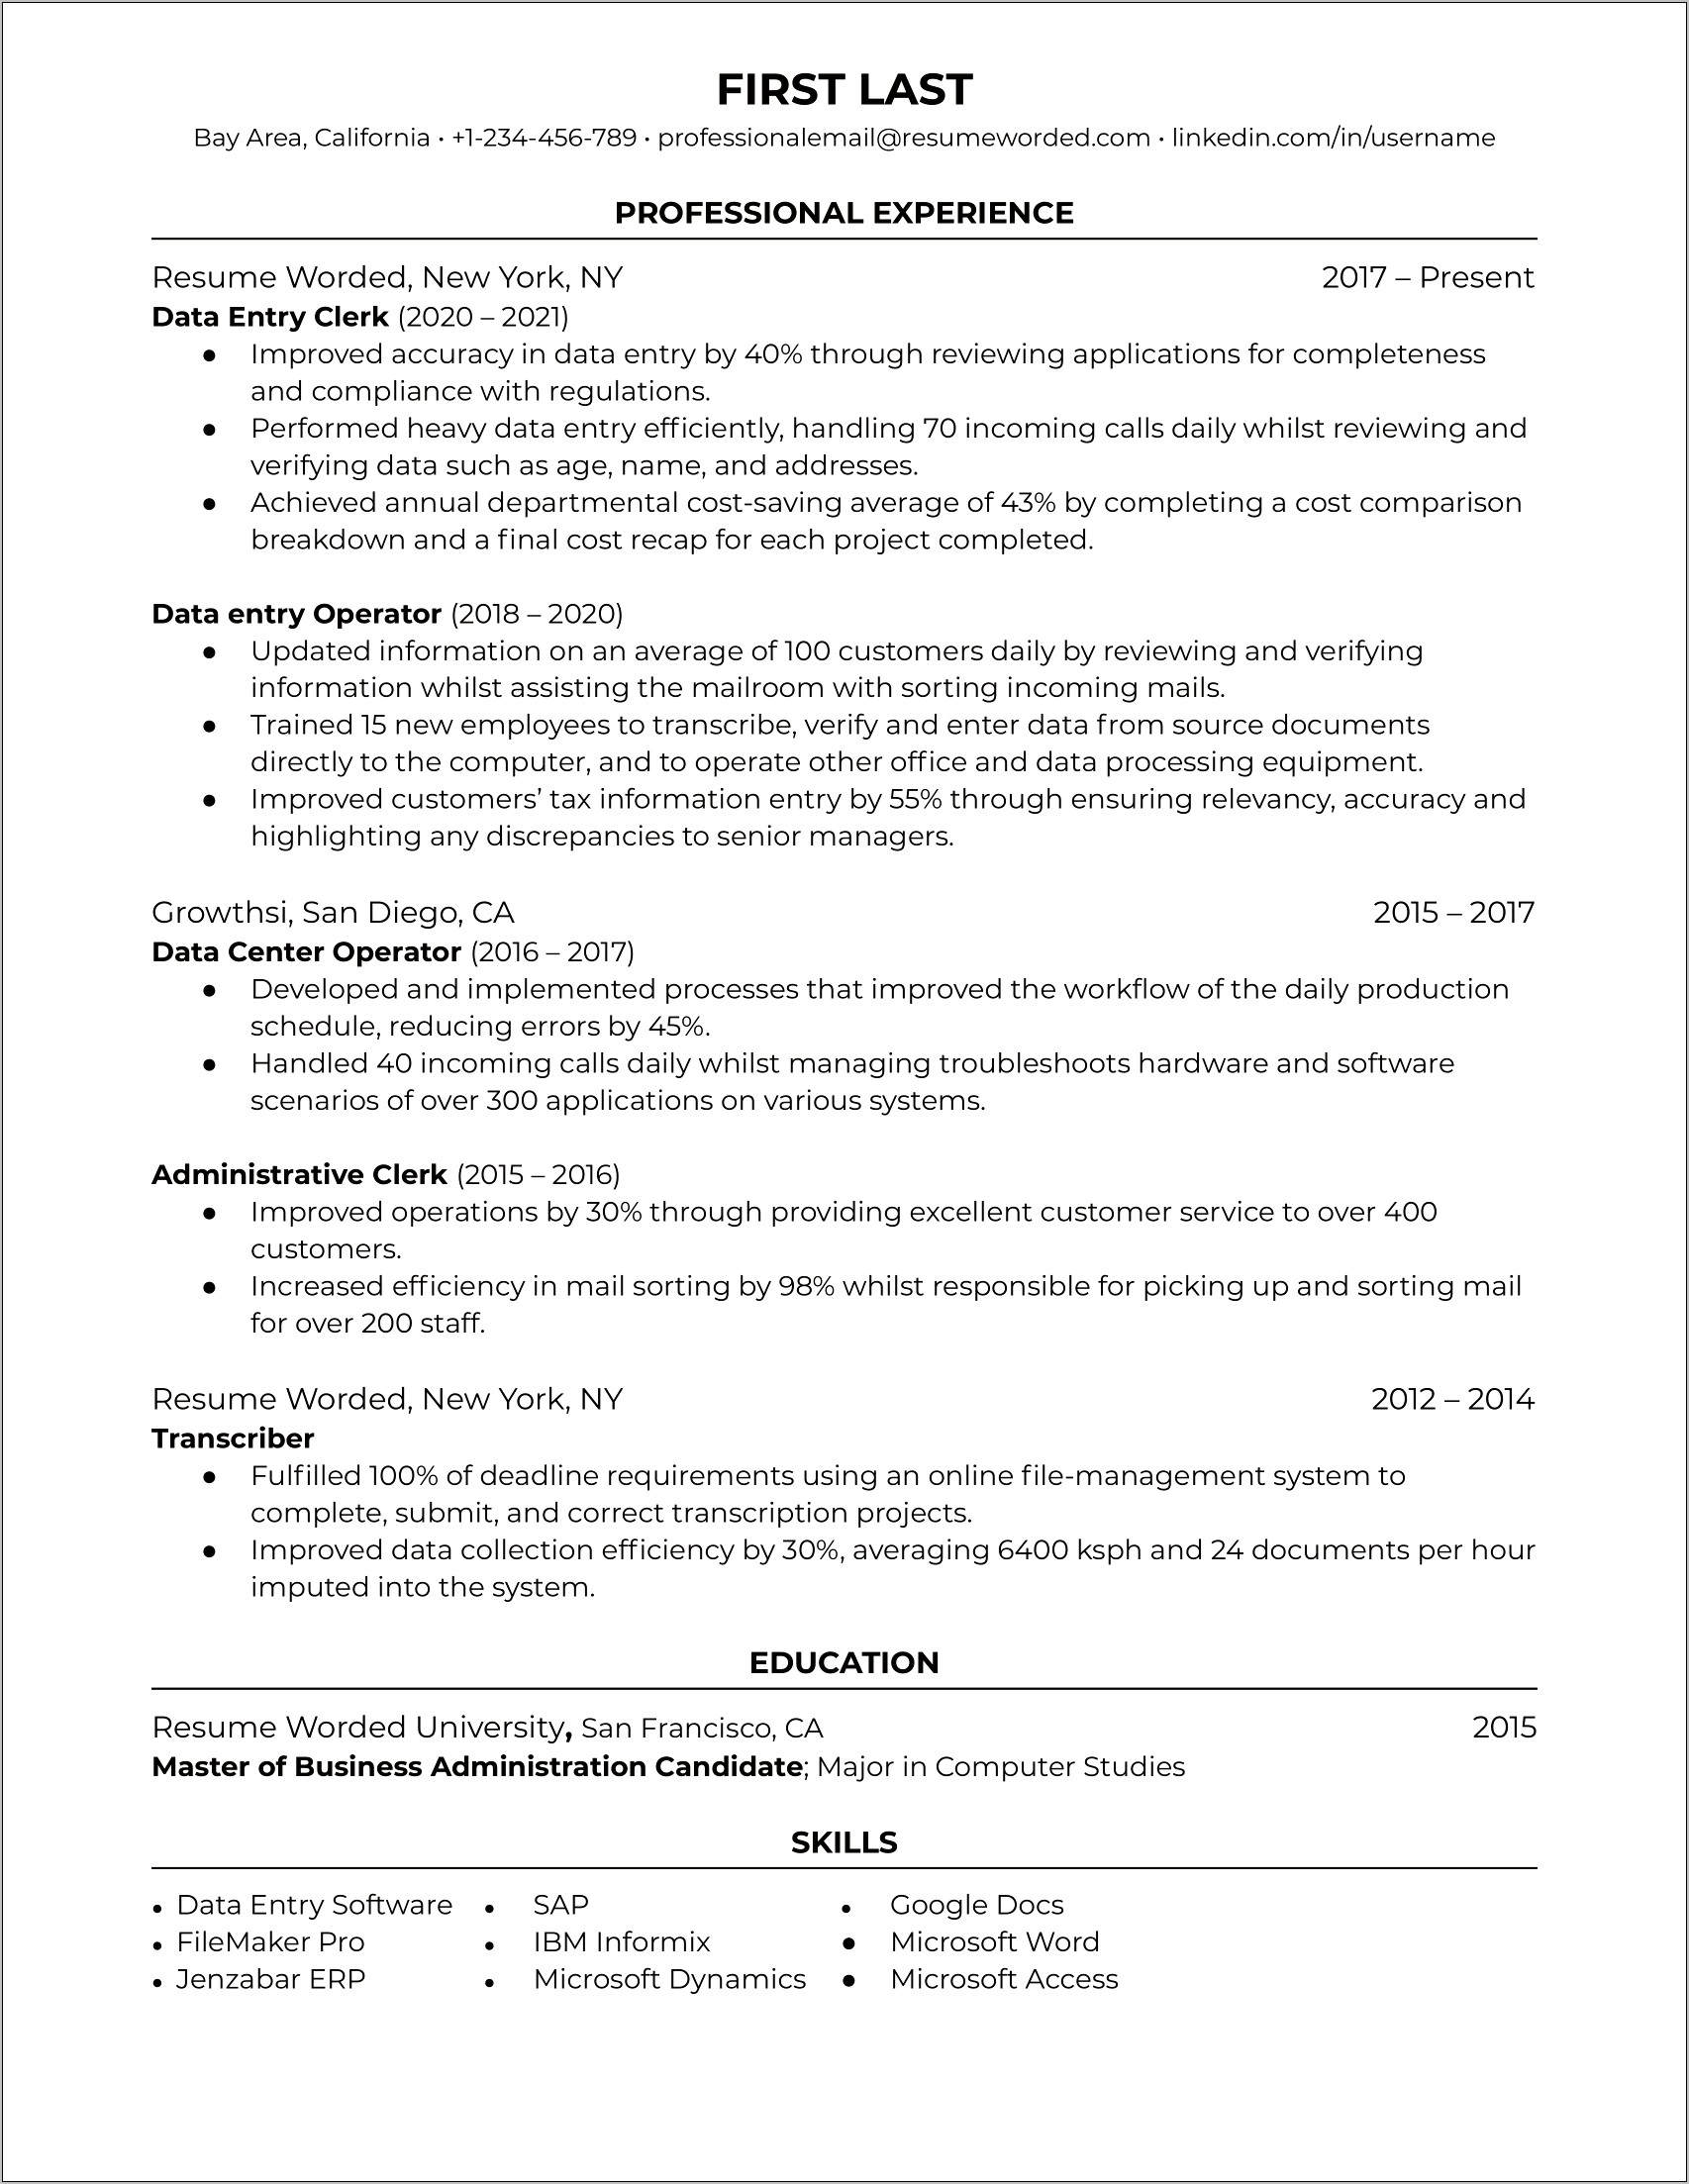 Data Entry Specialist Job Description For Resume